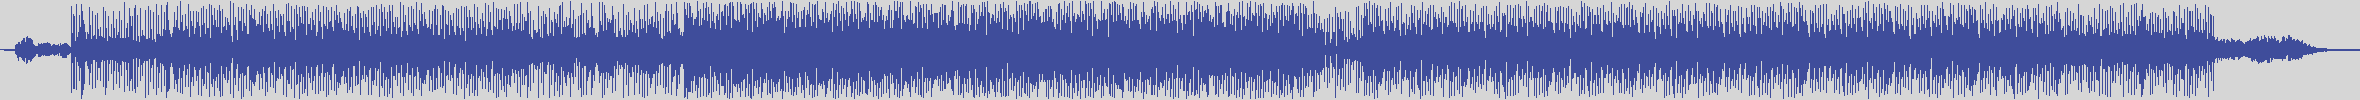 nf_boyz_records [NFY041] Sleeve X - Really Giraffe [Original Mix] audio wave form